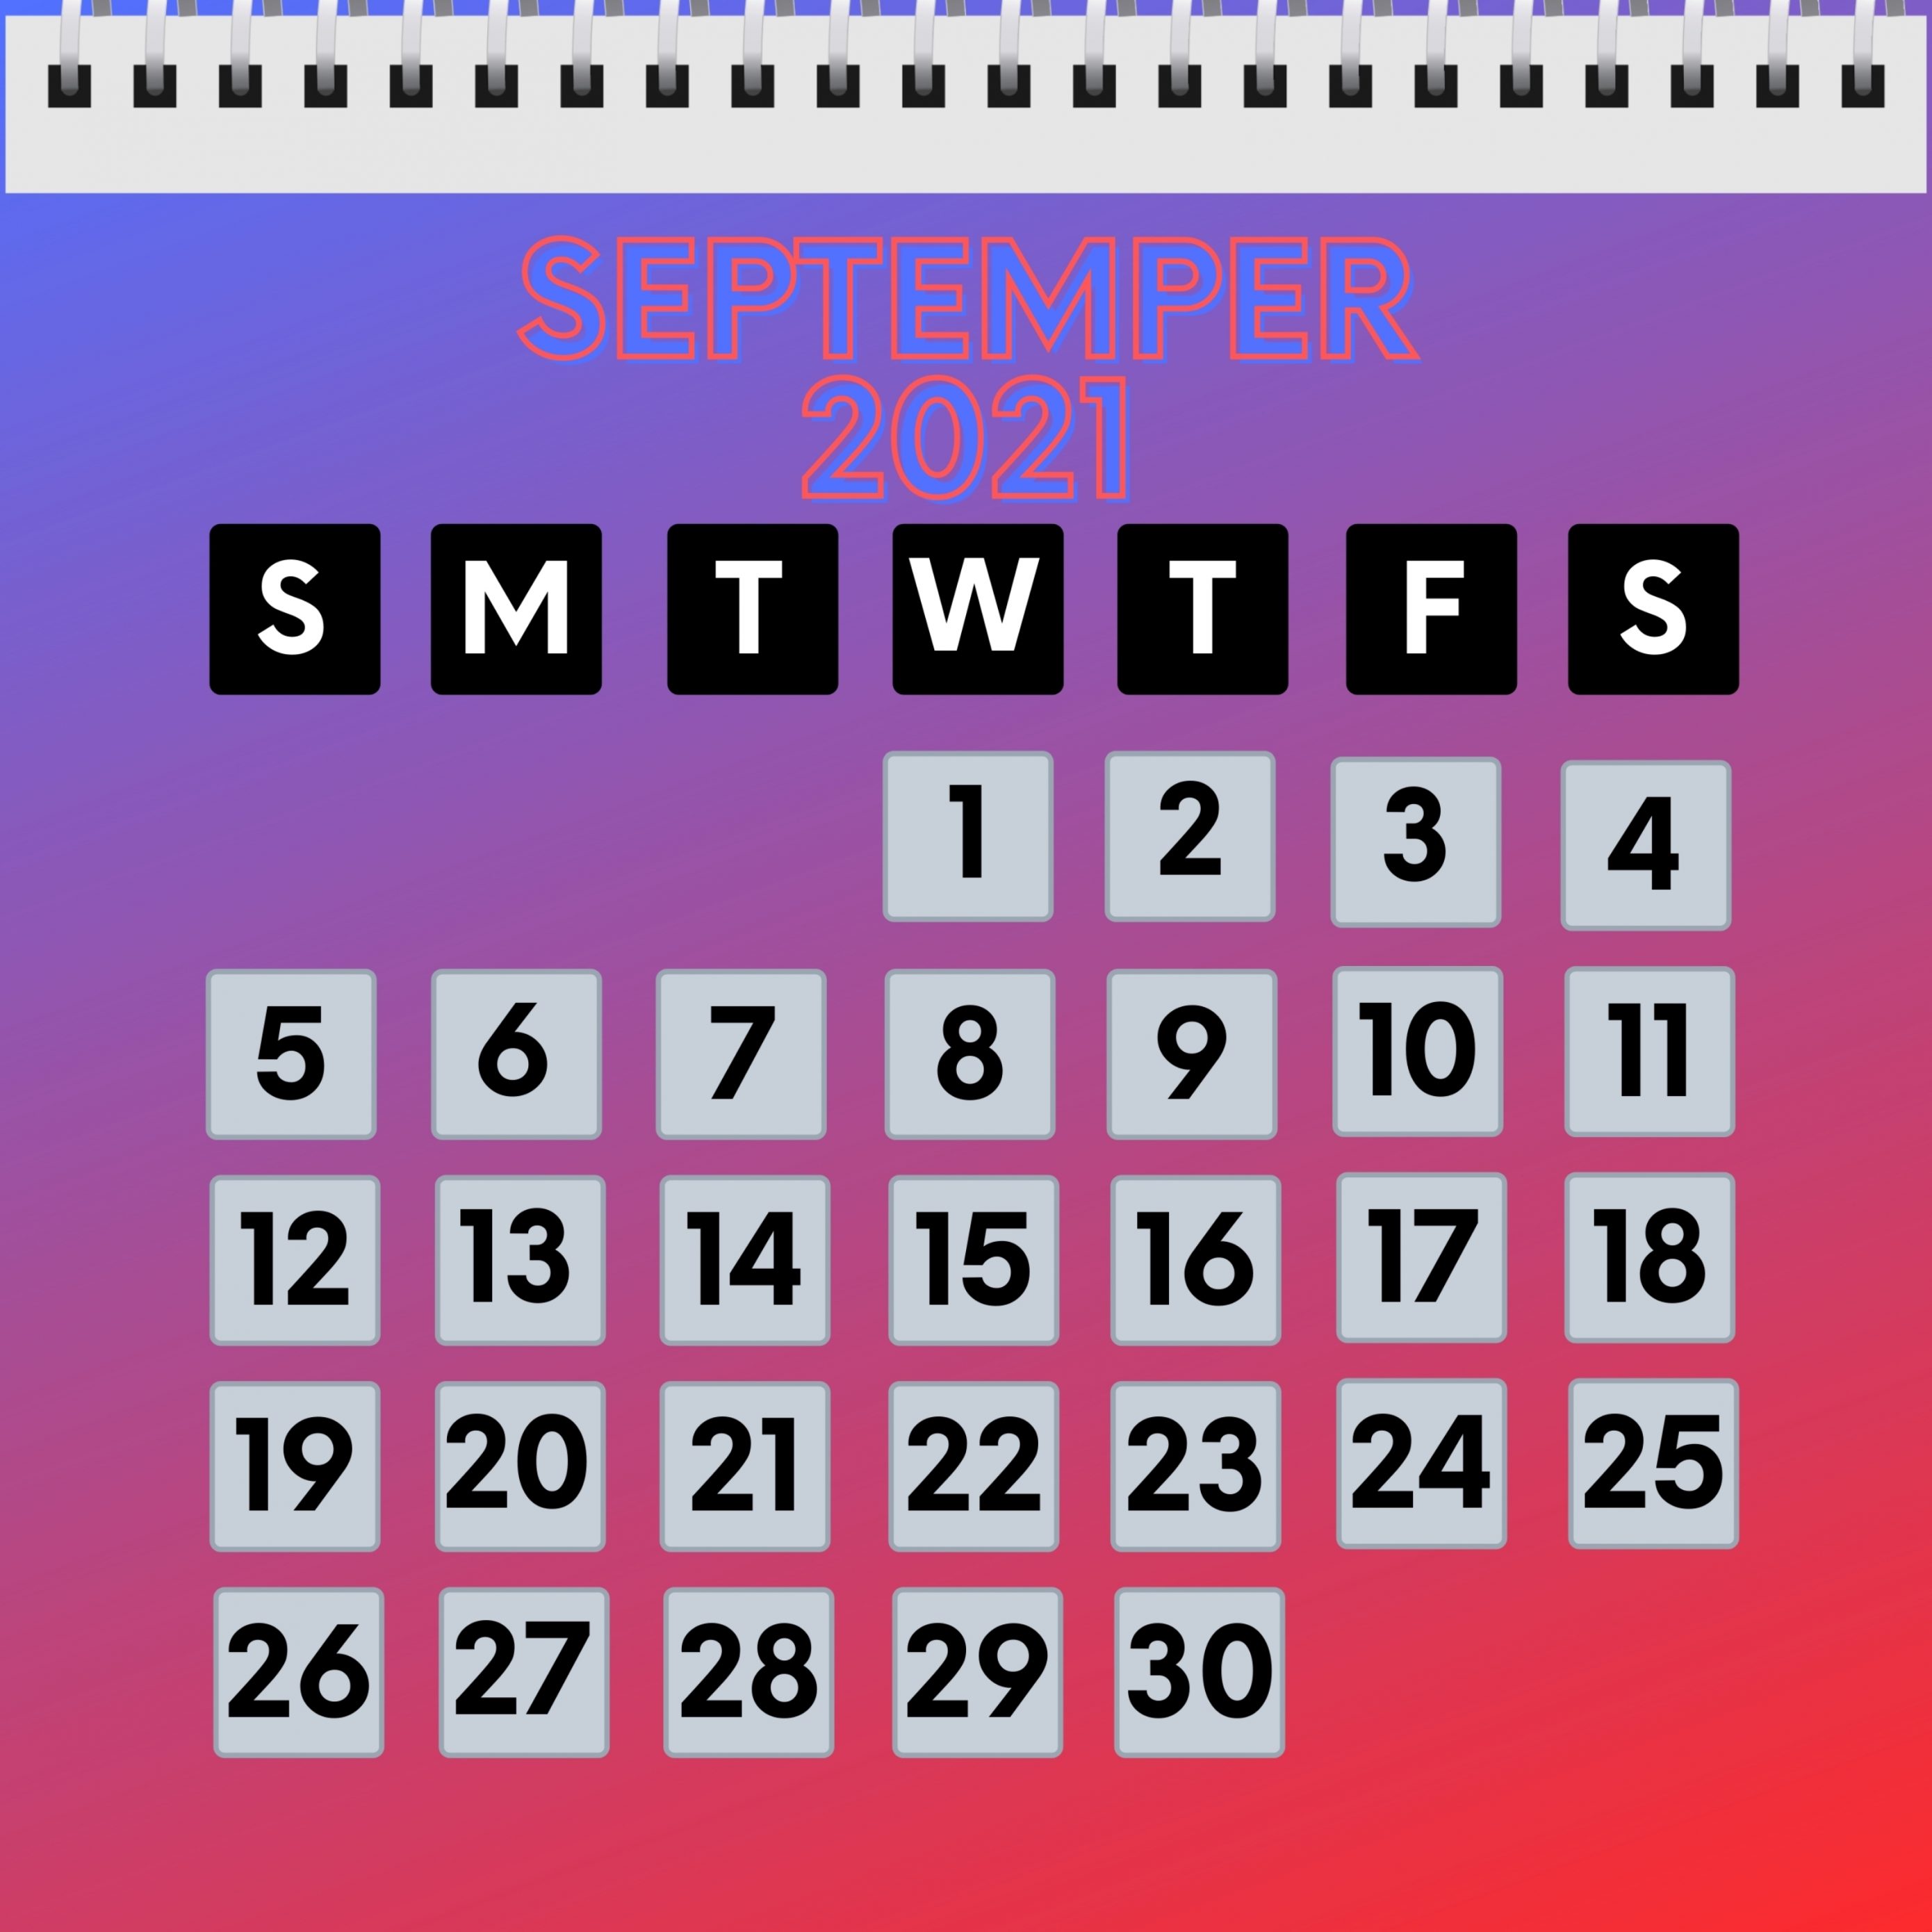 2780x2780 Parallax wallpaper 4k September 2021 Calendar iPad Wallpaper 2780x2780 pixels resolution